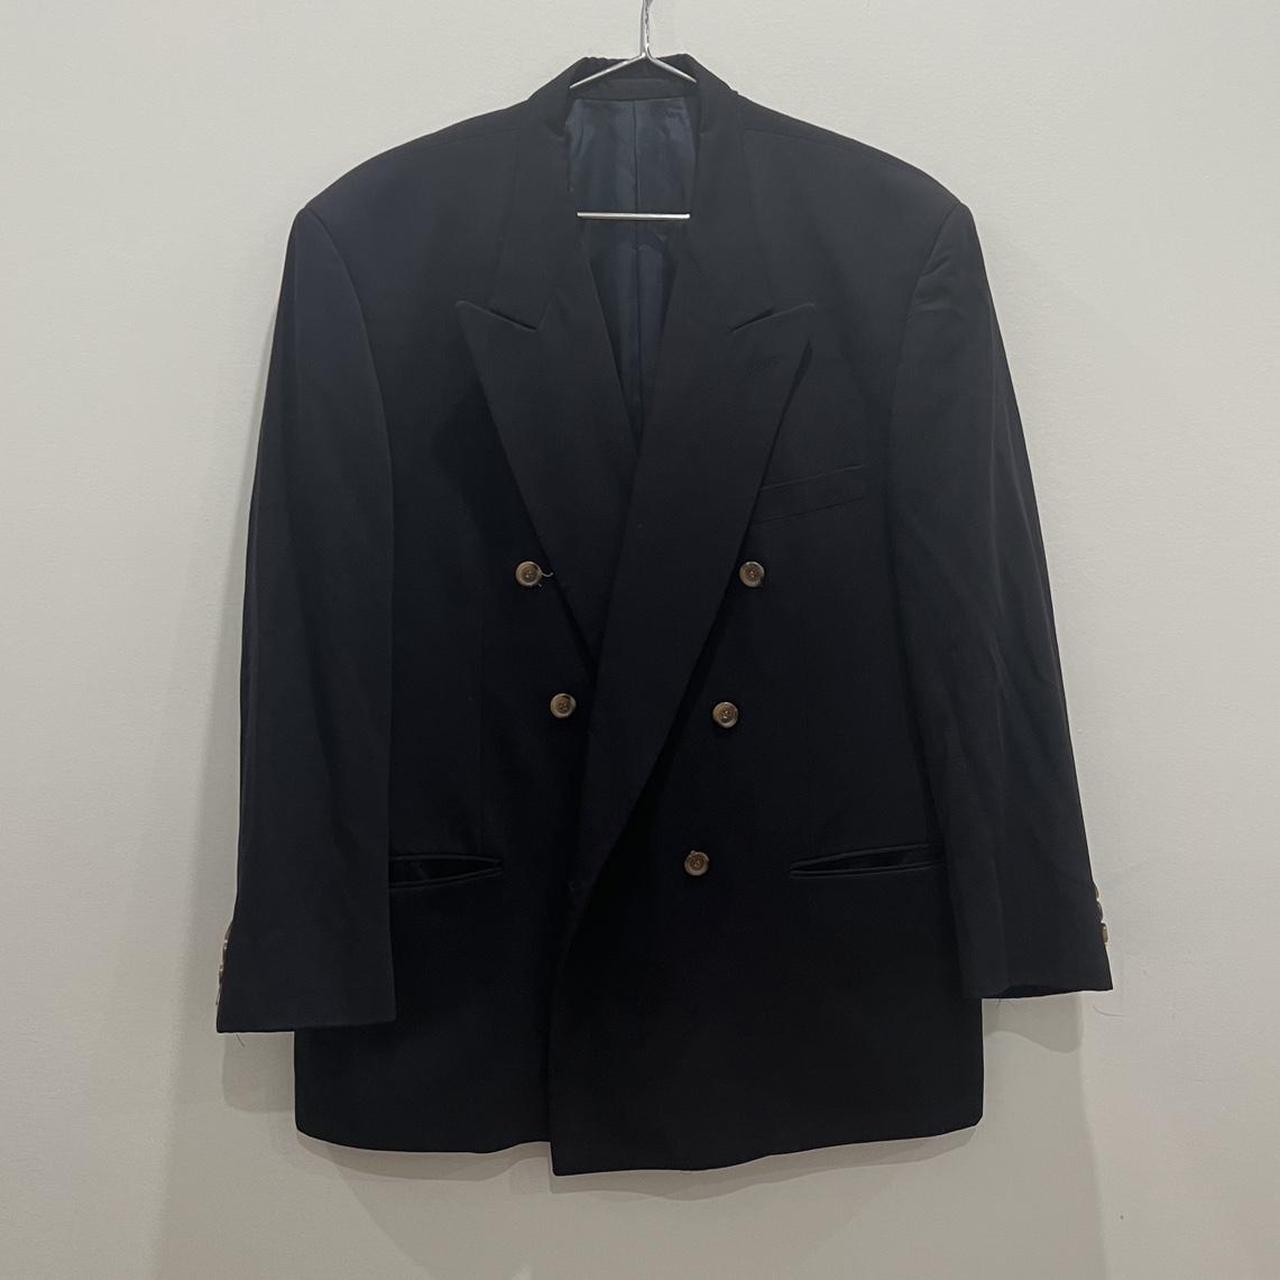 L/XL Vintage Tallia blazer - inside pockets and... - Depop